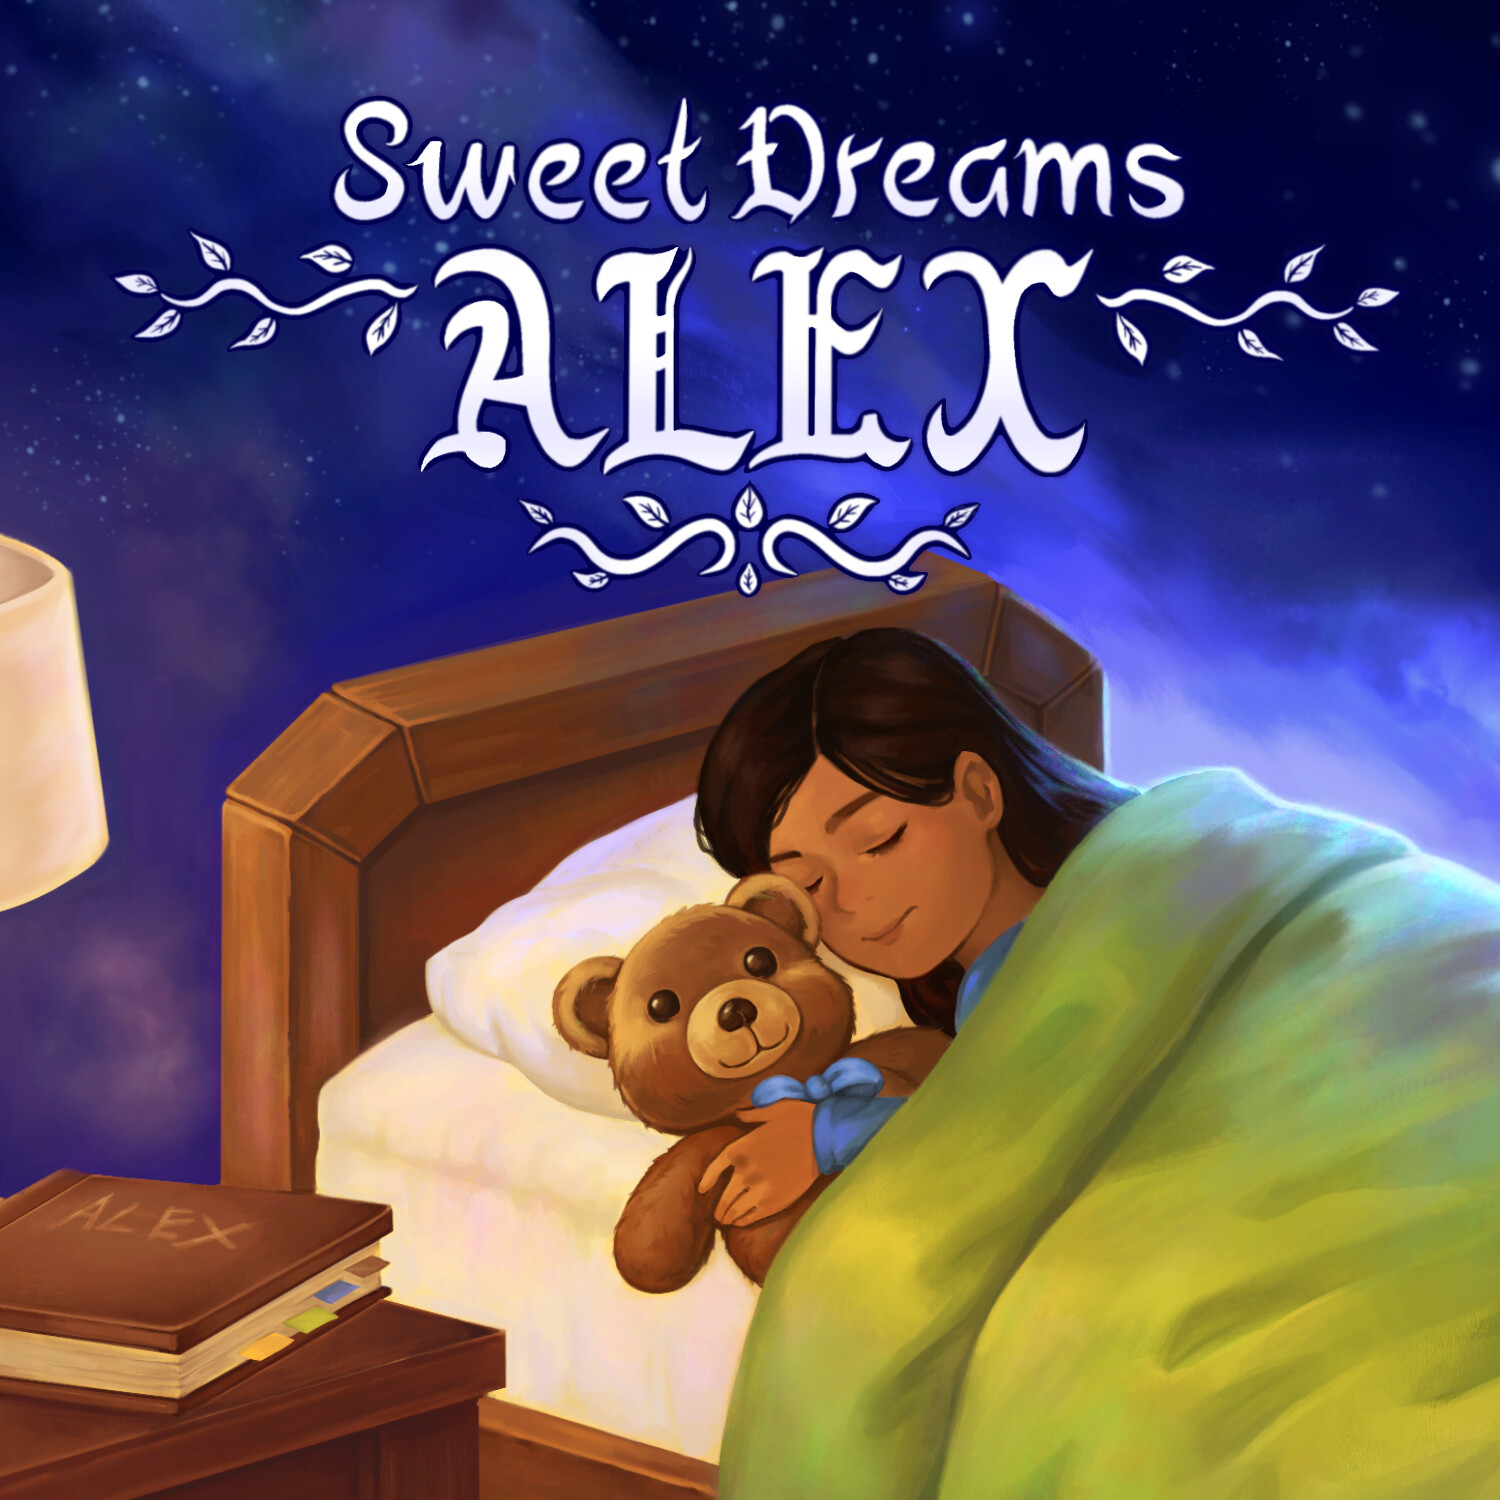 Sweet Dreams Alex on Steam